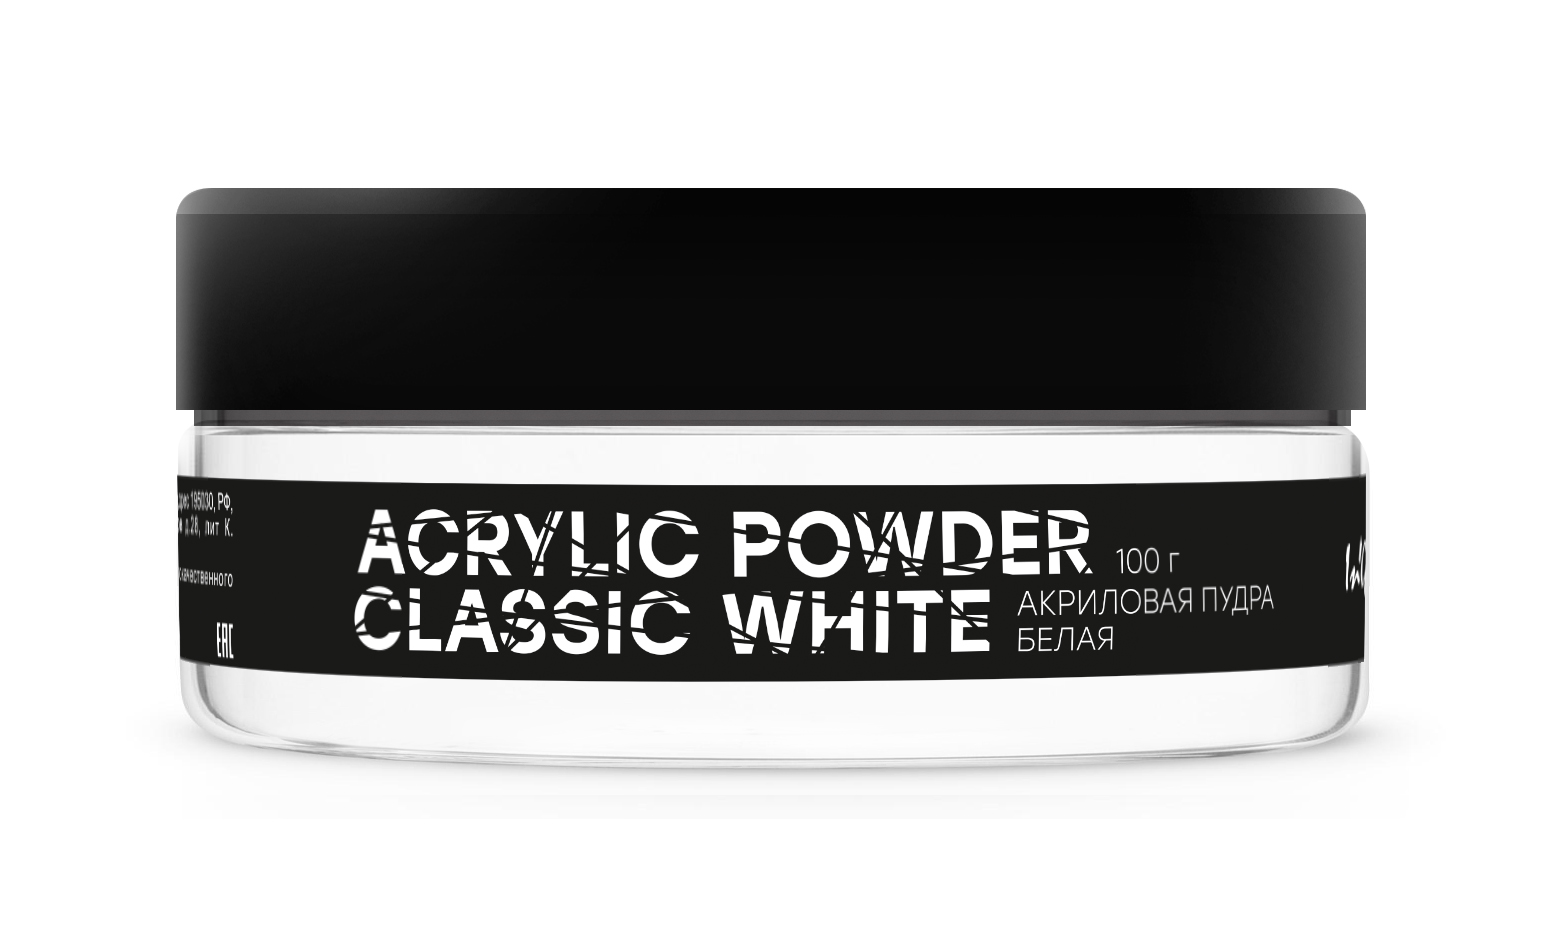 Акриловая пудра белая Acrylic Powder Classic White, 100 г мясорубка moulinex me476132 2000 вт 1 скорость 2 3 кг мин белая